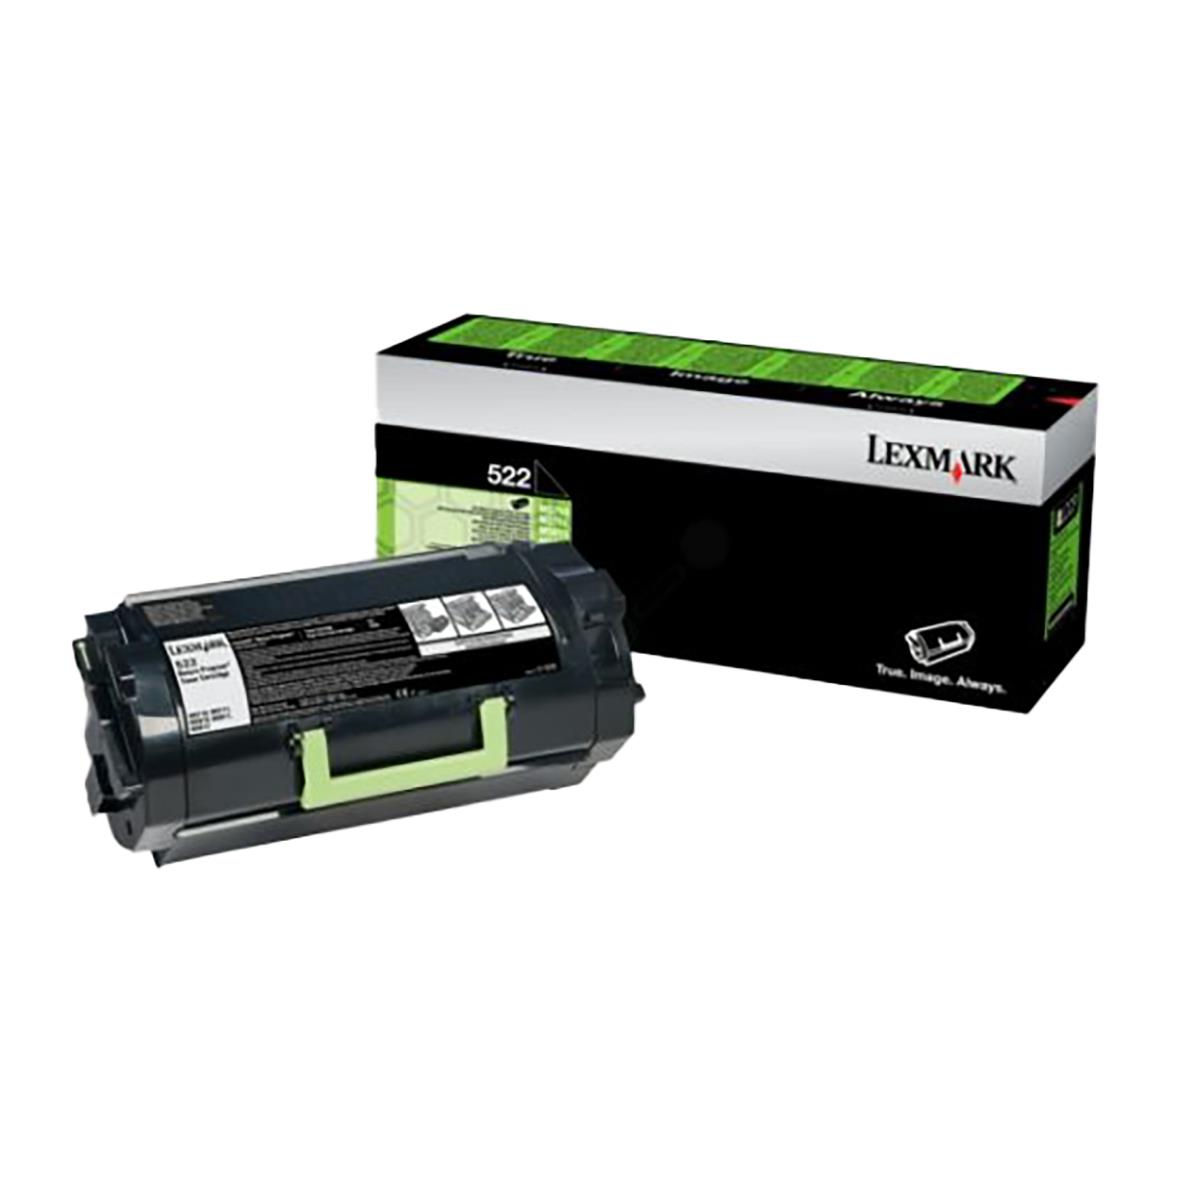 Lasertoner Lexmark 45000 Sidor 52D2X00 Svart 27042034